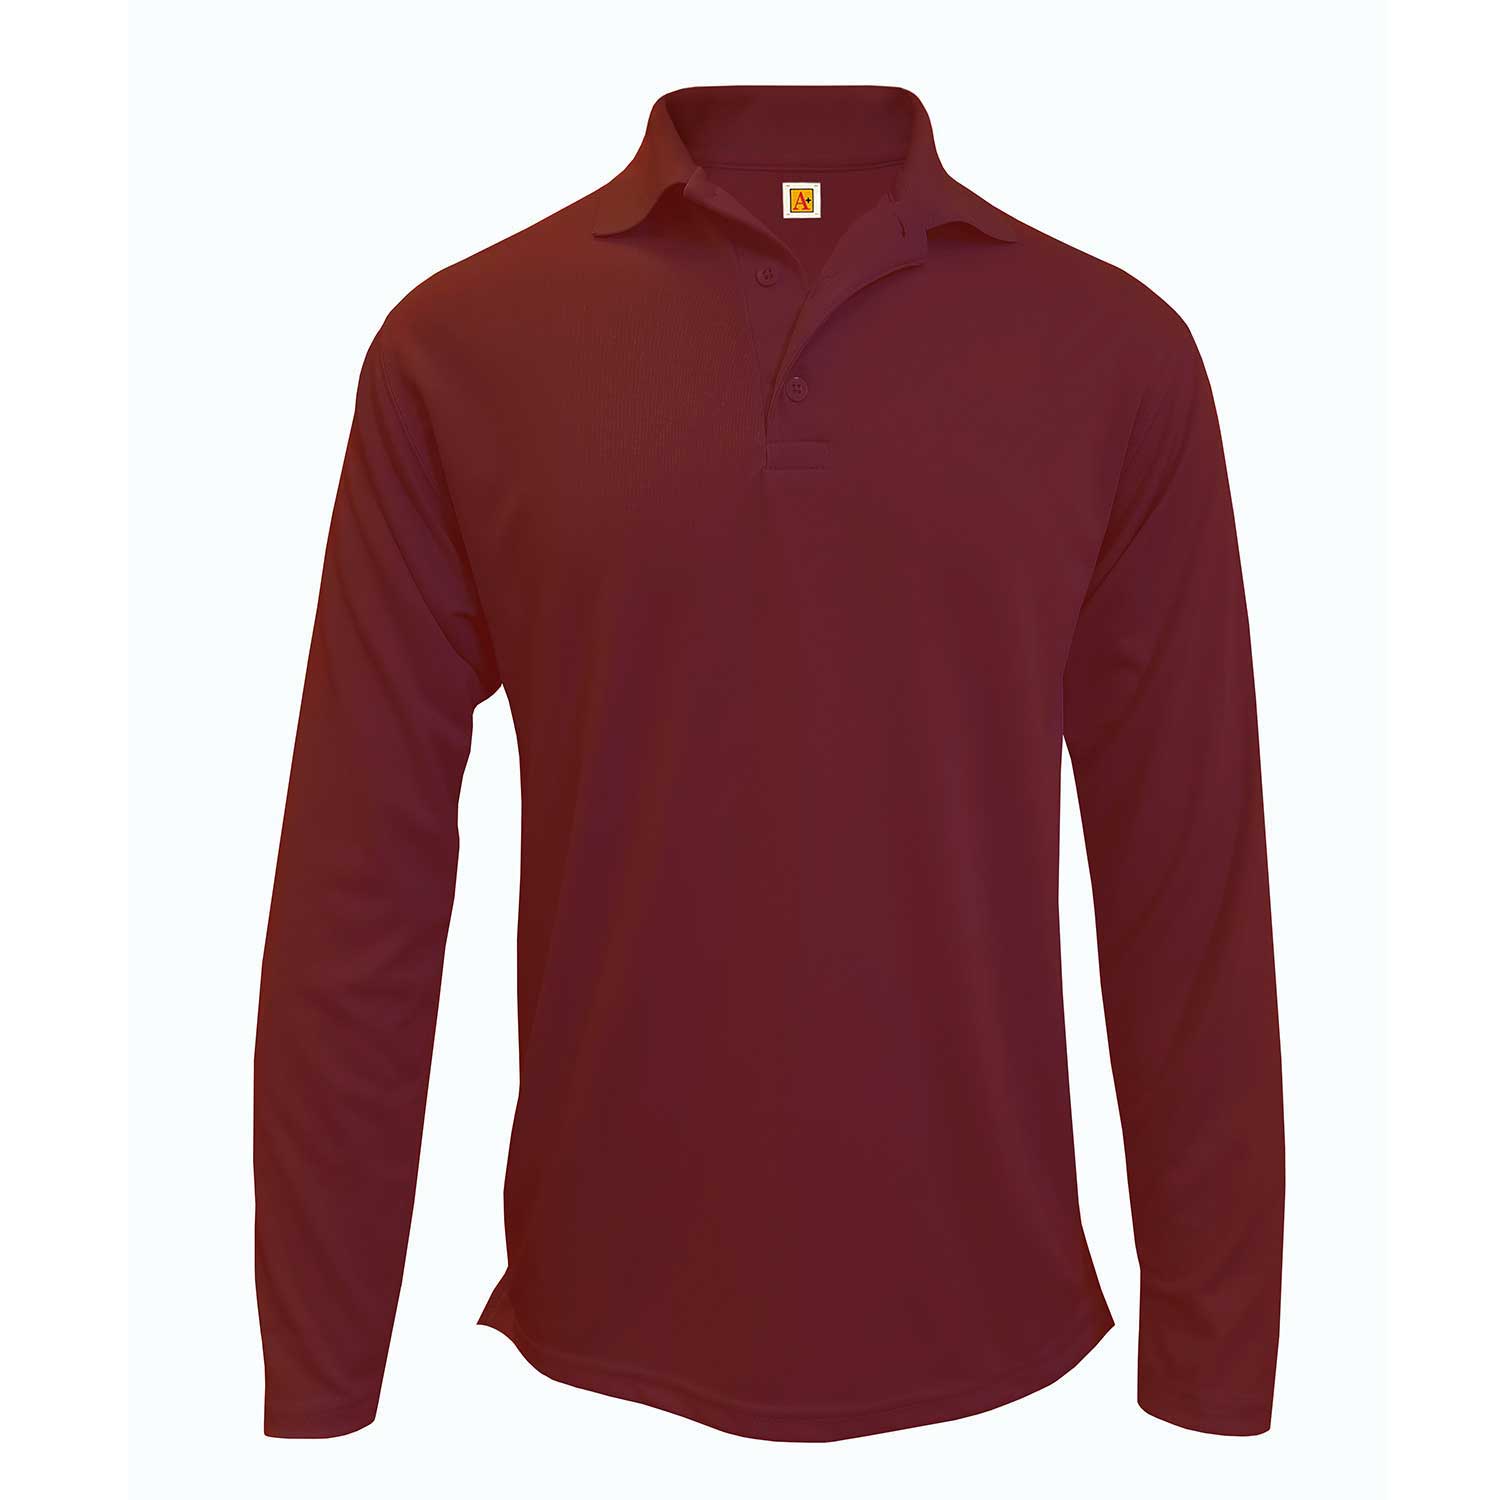 St. Hubert School - Unisex Performance Knit Polo Shirt - Moisture Wicking - 100% Polyester - Long Sleeve